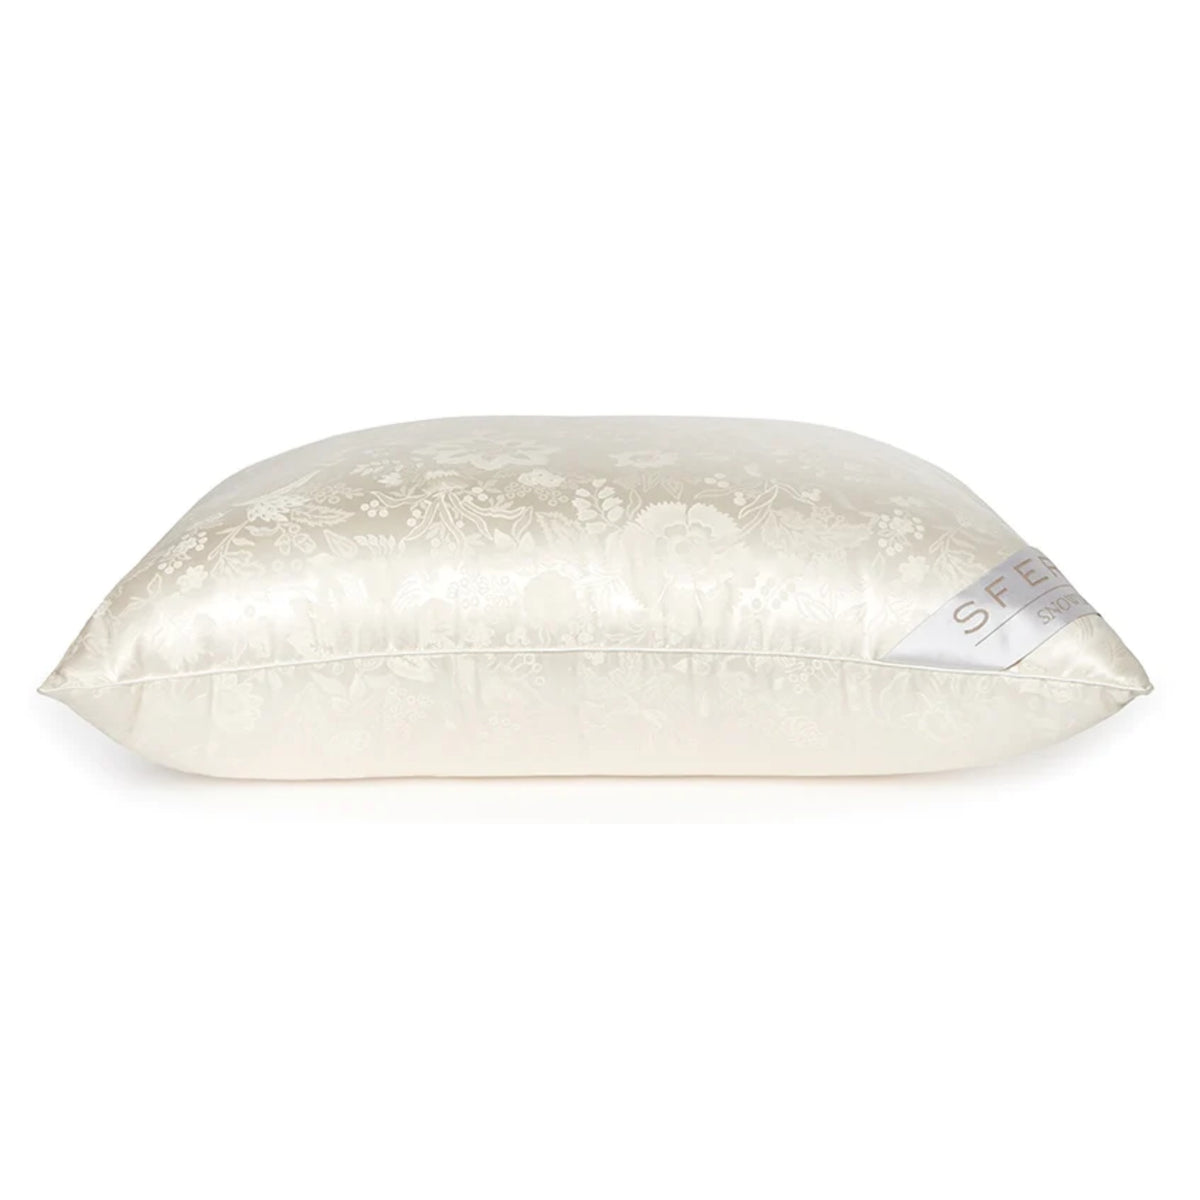 Sferra Snowdon Pillow Laying Flat on White Foreground